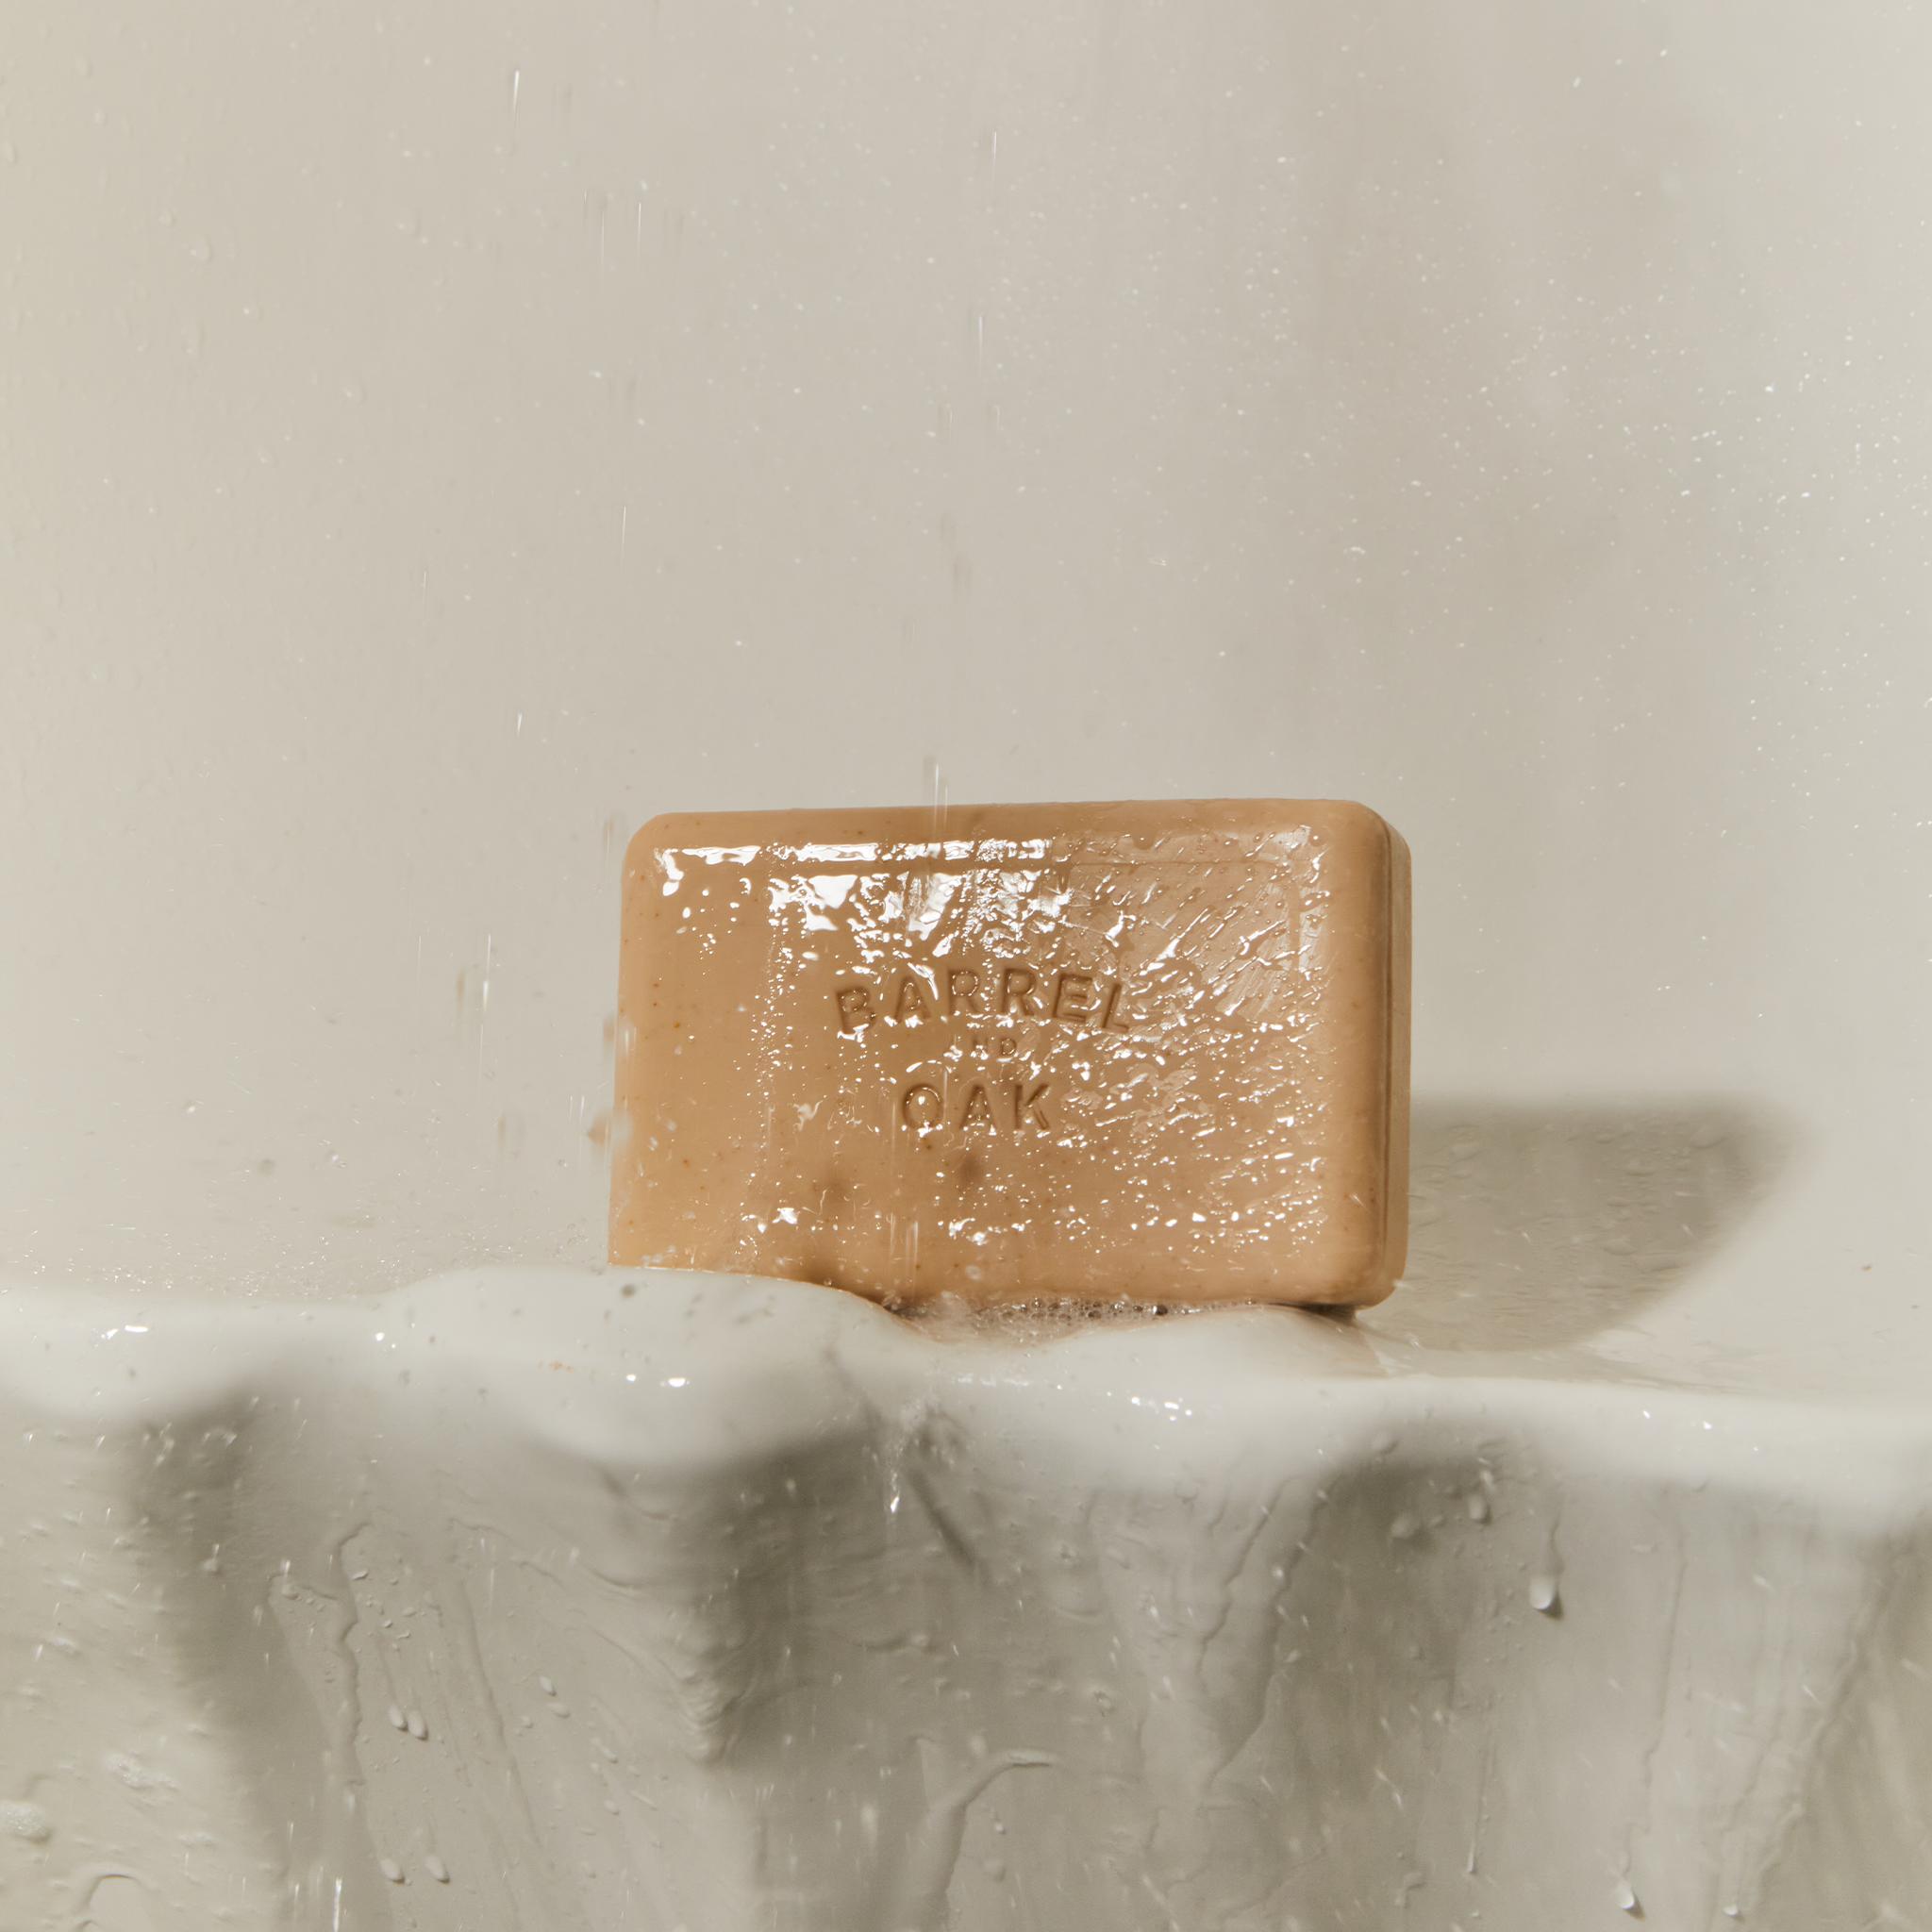 Exfoliating Bar Soap - Spiced Sandalwood 6 oz – Gentlemen's Hardware